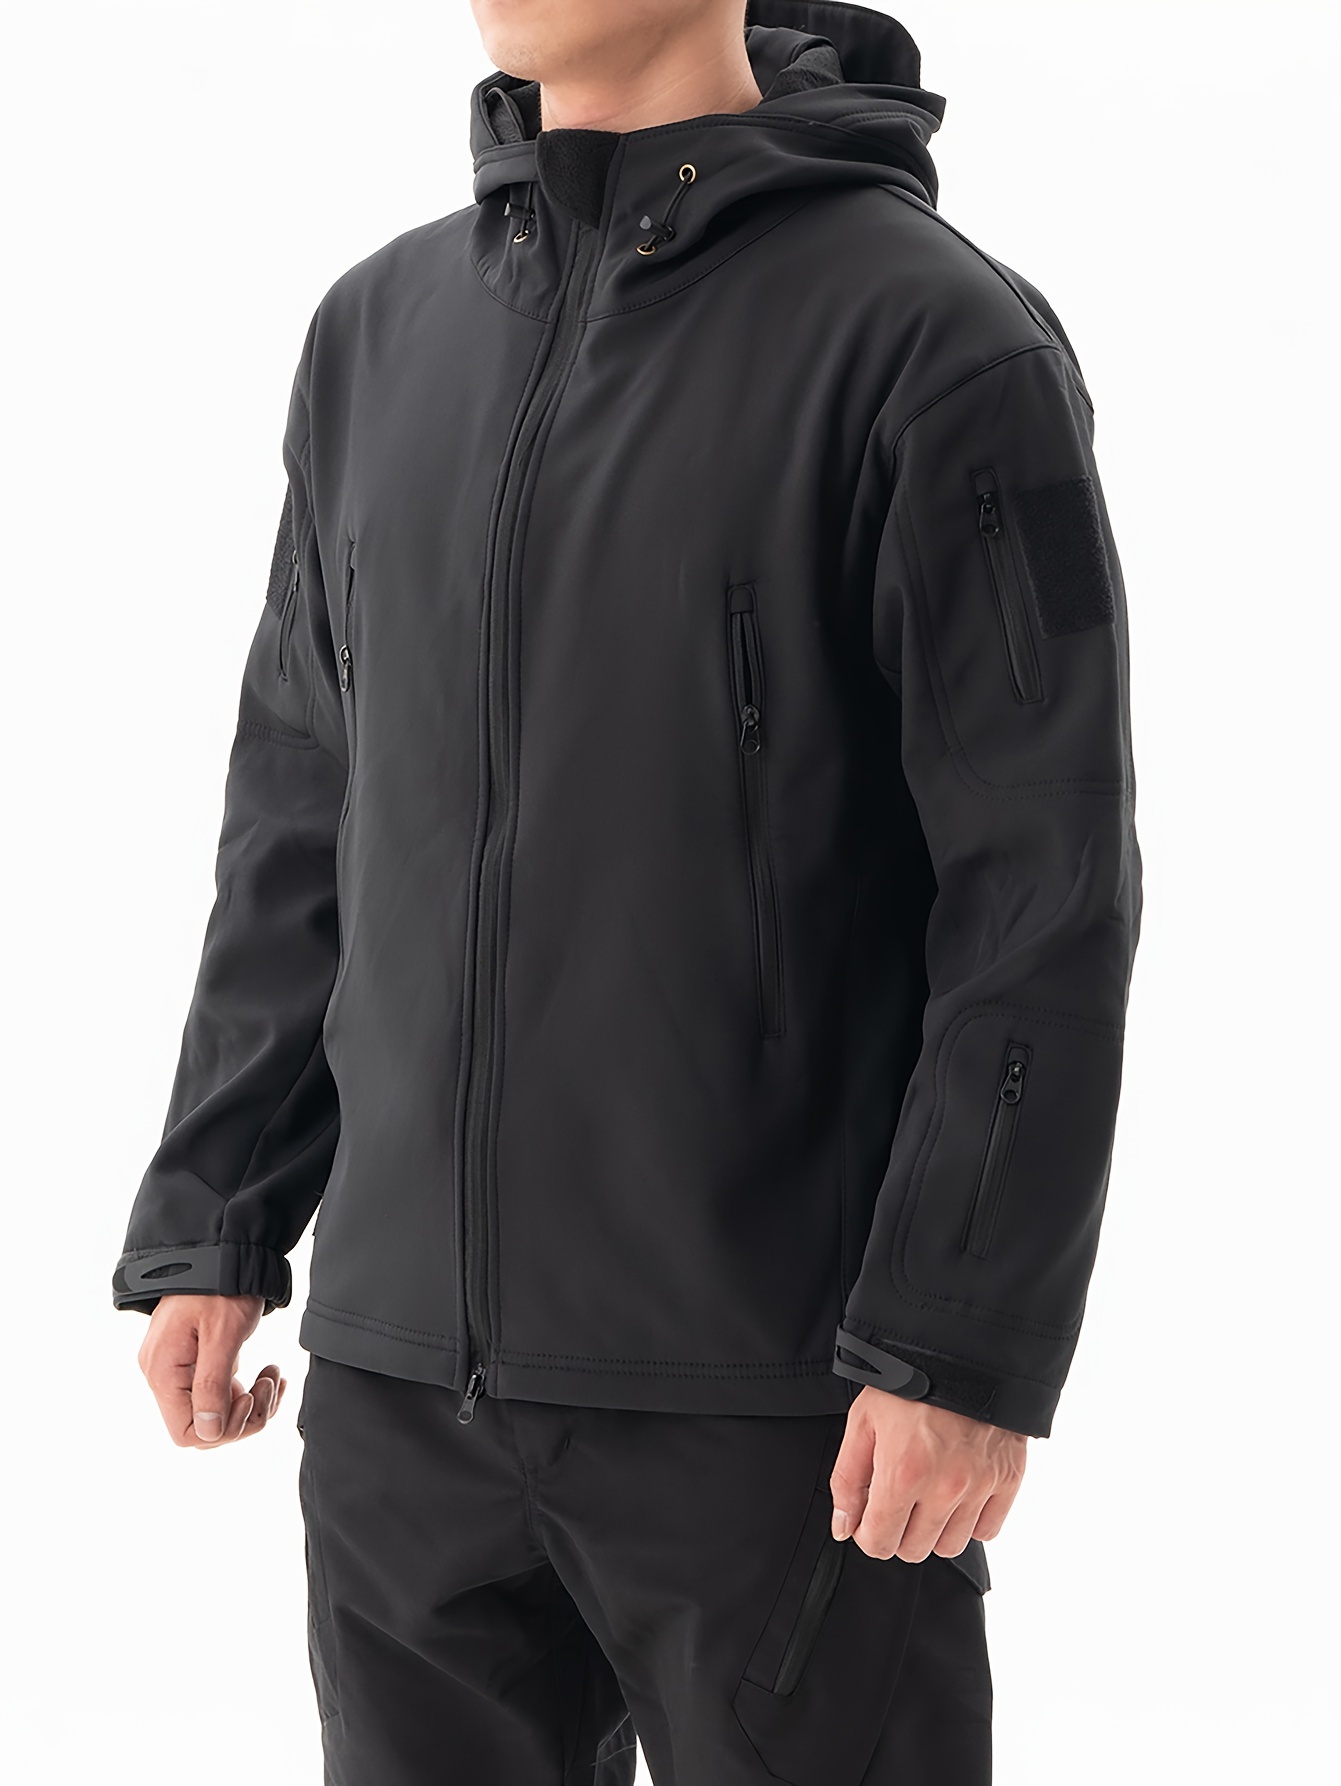 Men's Slim-Fit Tactical Softshell Jacket Hooded Lightweight Lined Water  Resistant Winter Hiking Windbreaker Jackets 